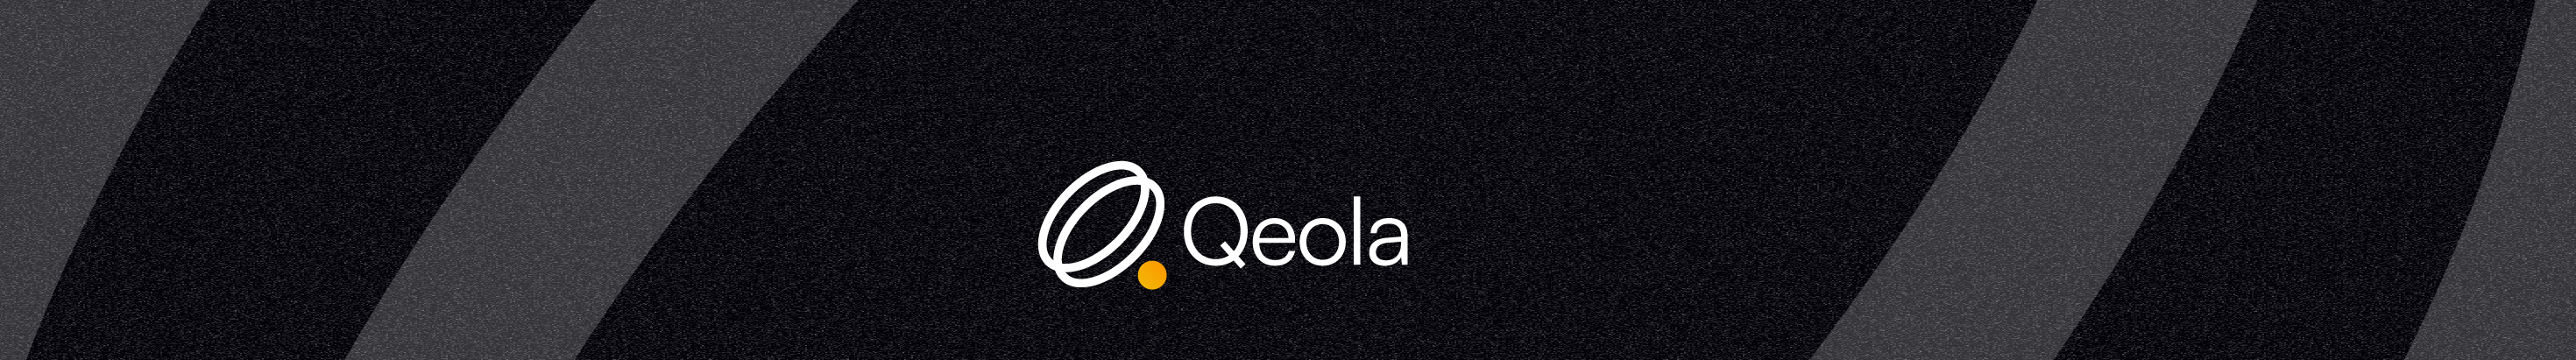 Qeola Ltd's profile banner